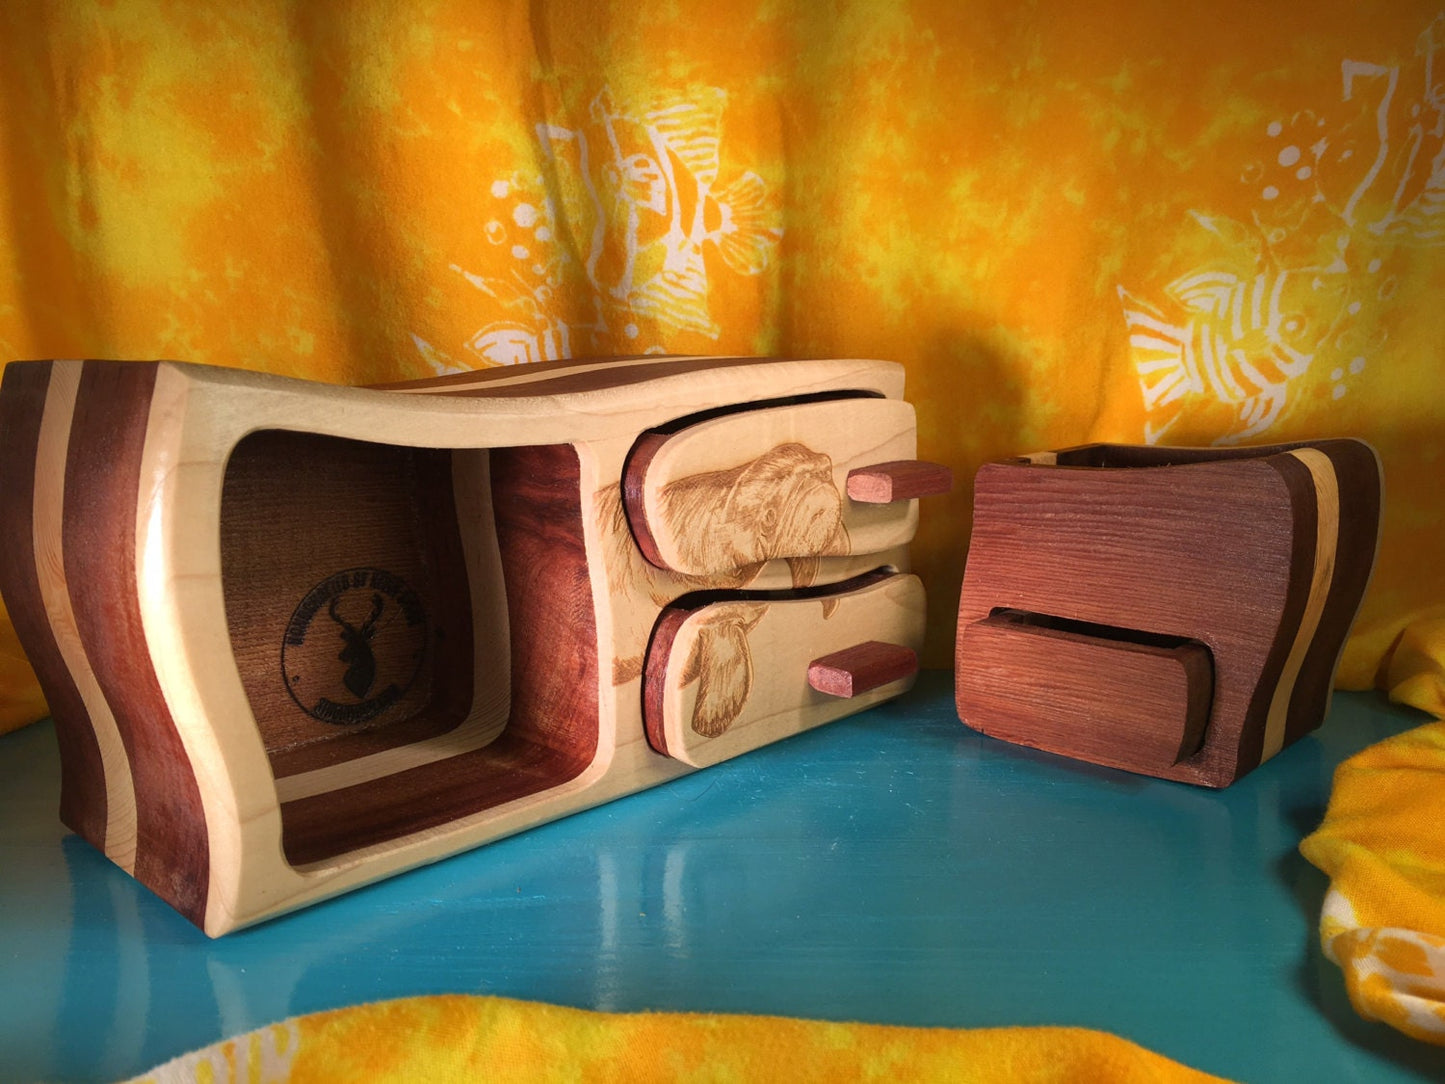 Solid Wood Box W/Drawers - Manatee, Jewelry Box, Handcrafted, Custom Box, Personalized Box, Handmade, Home Decor, Engraved, Stash Box